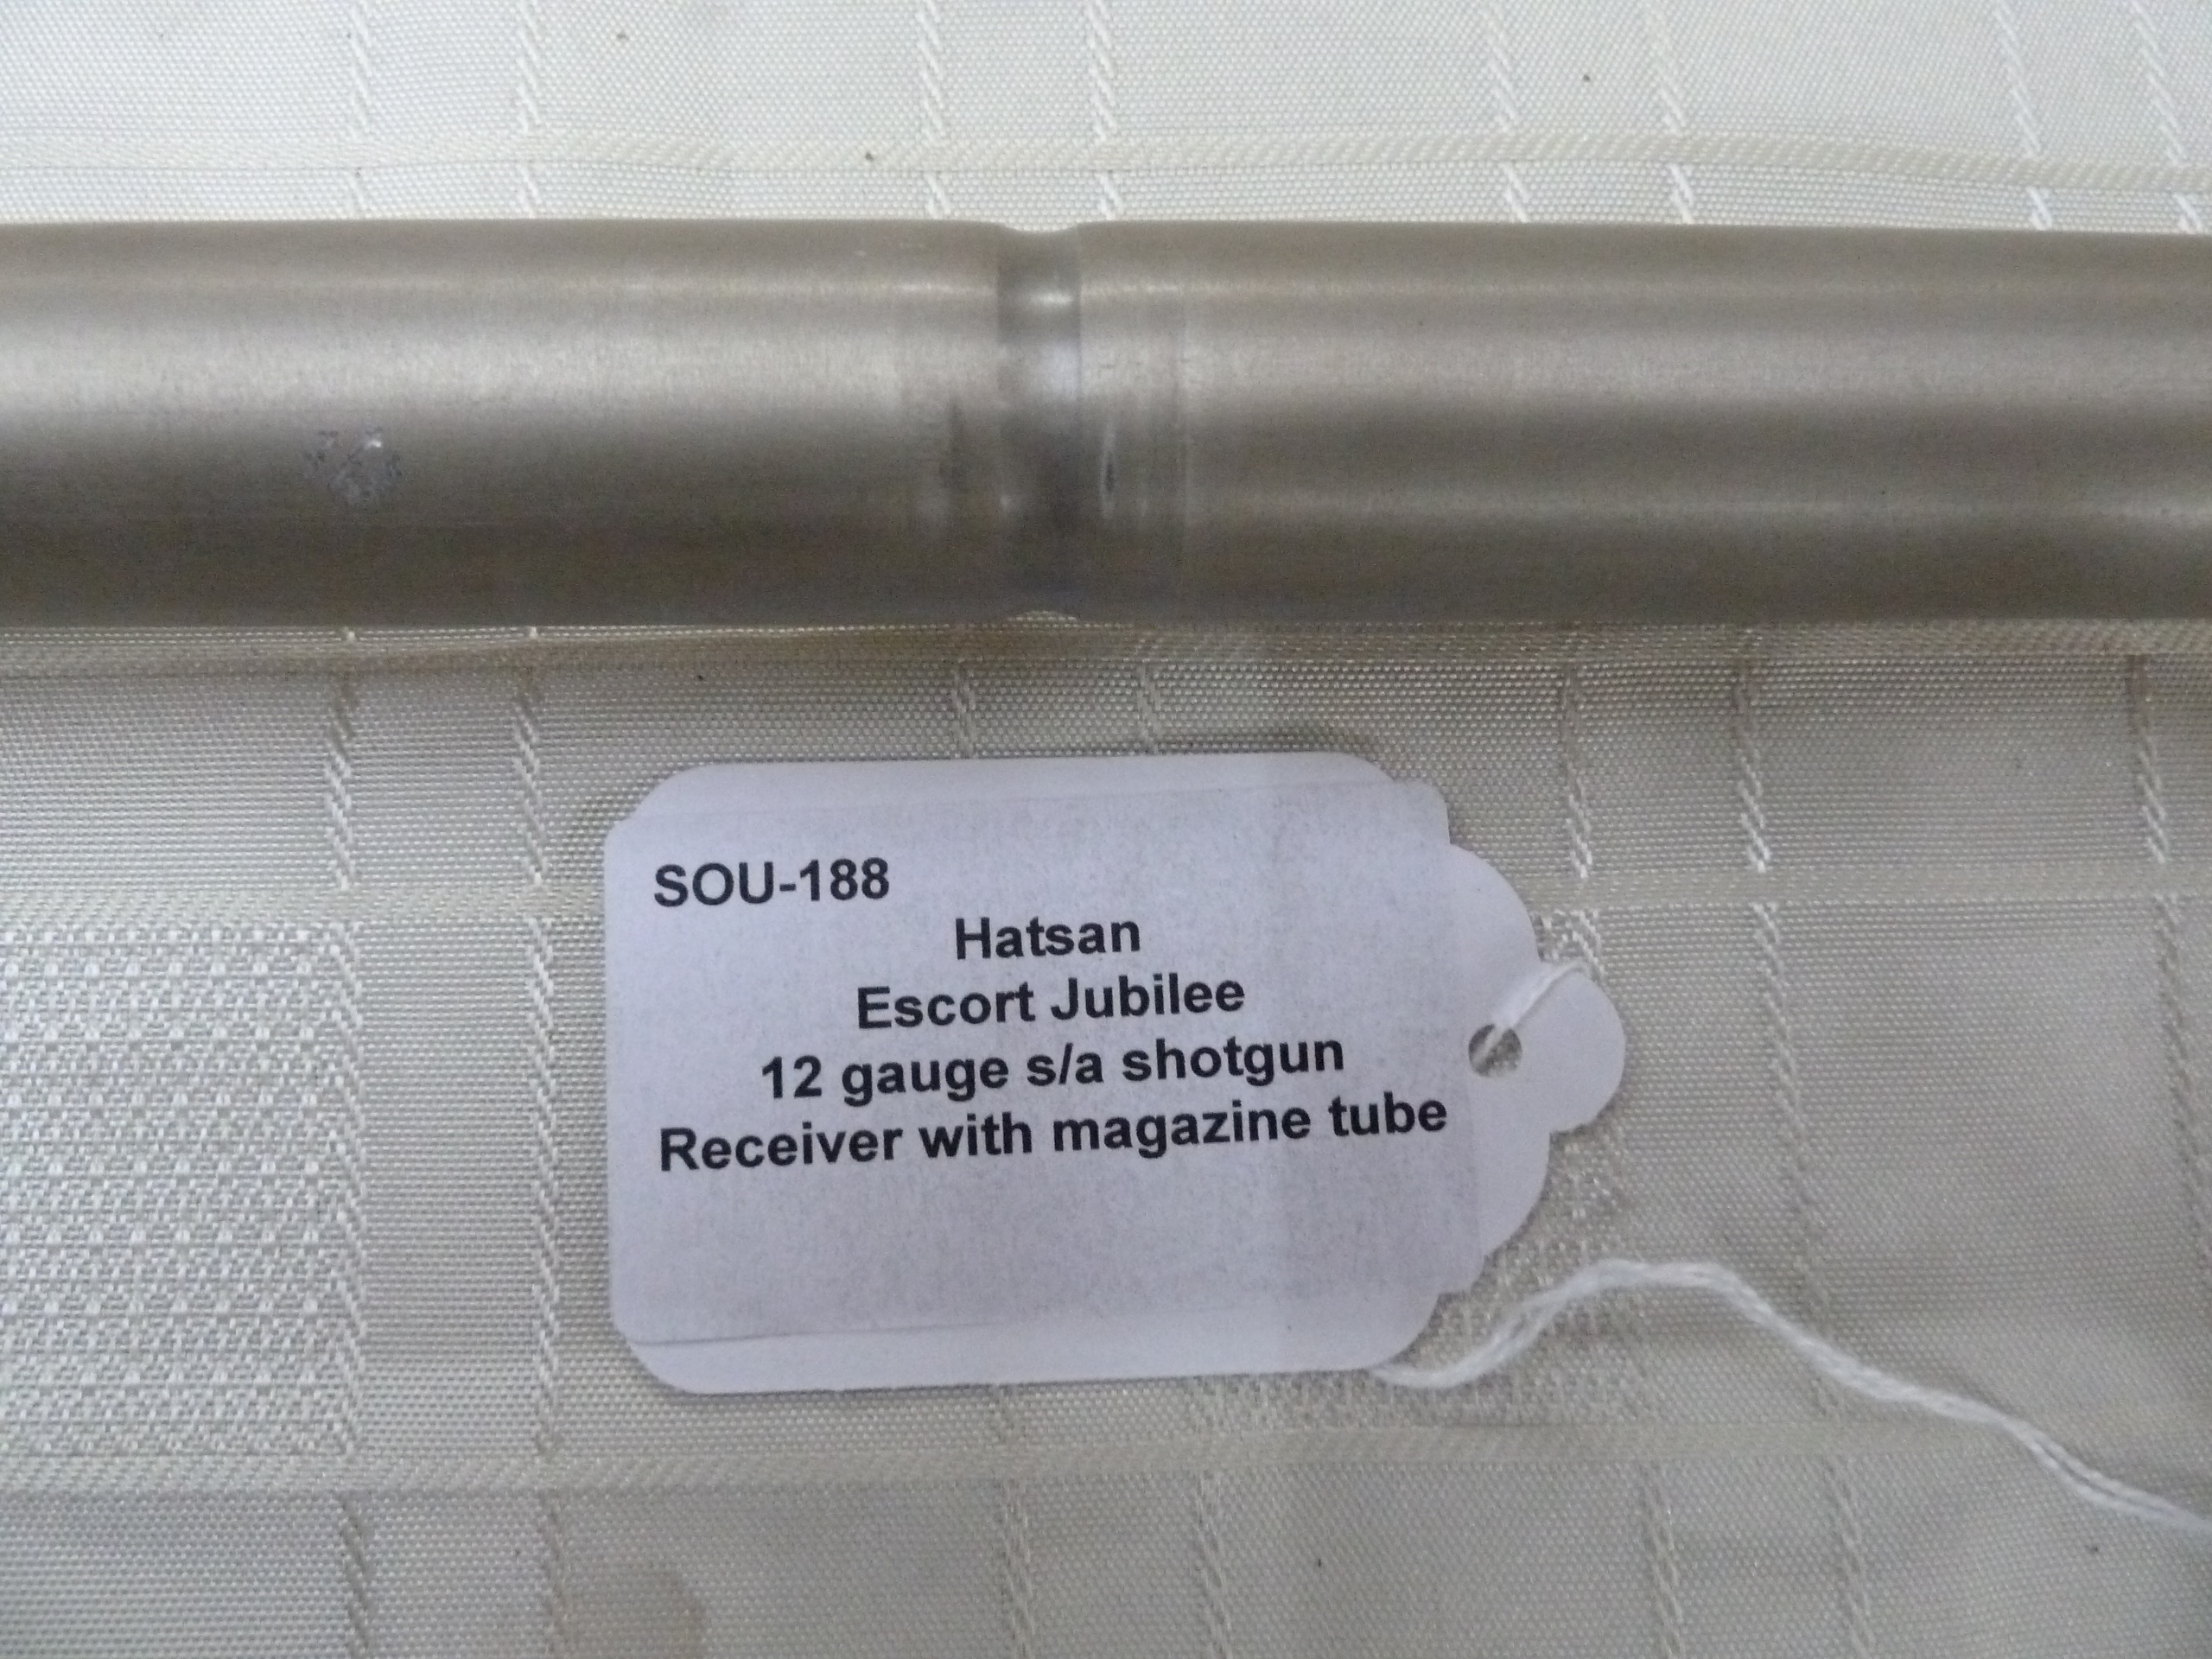 SOU-188 Hatsan Jubilee receiver with magazine tube (6)